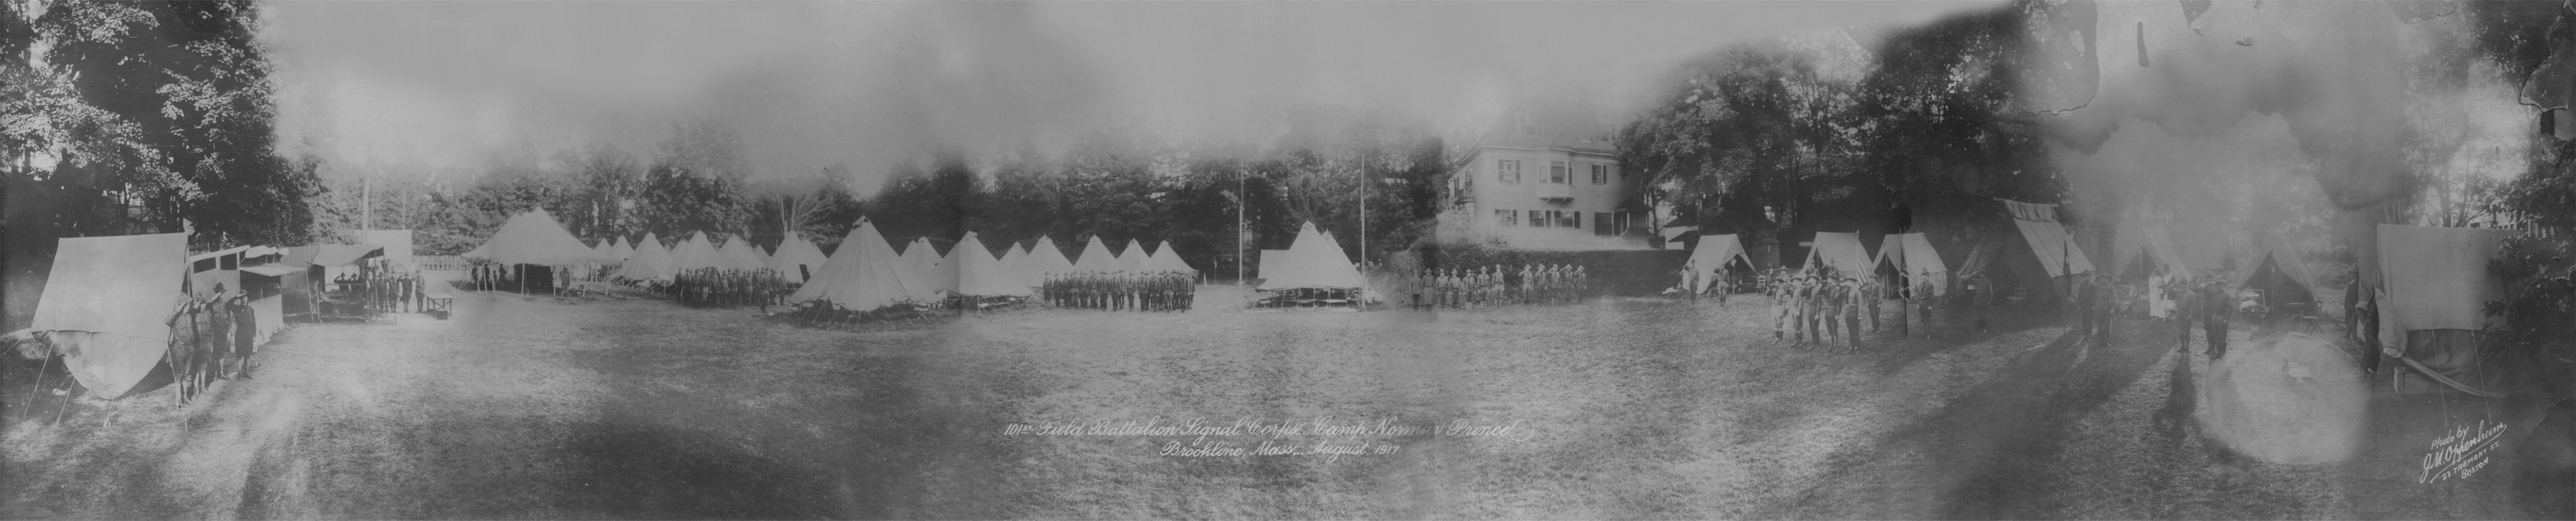 Camp Norman Prince, 1917